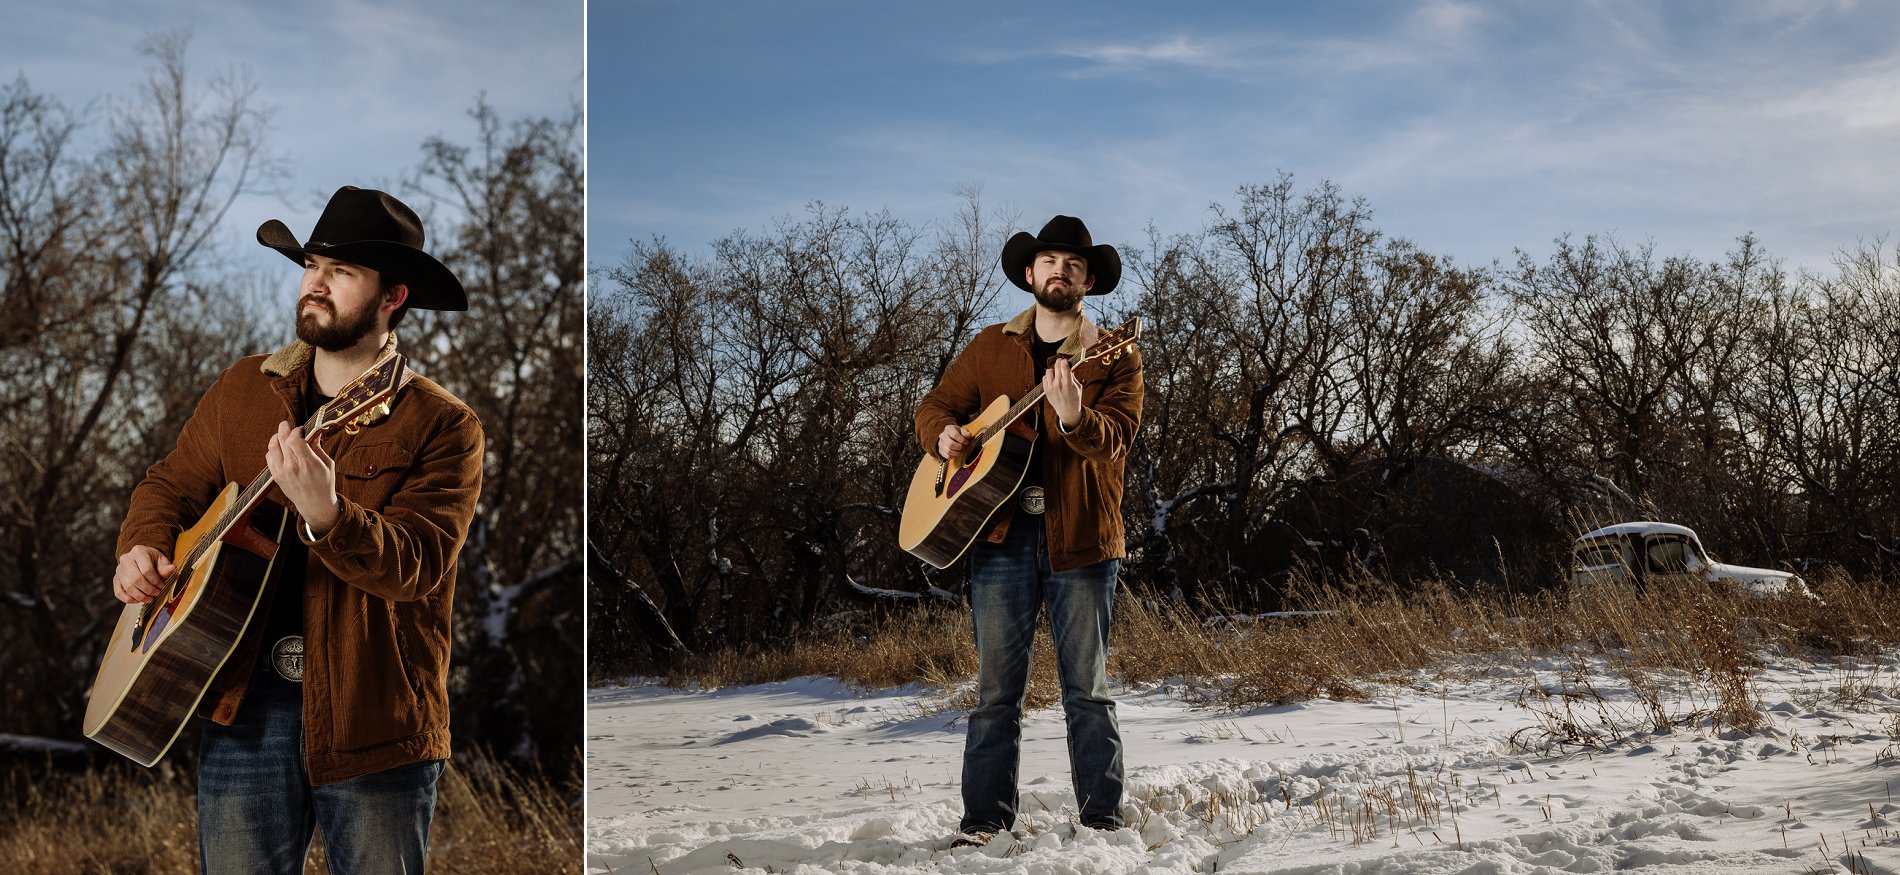 Artist press photos for country musician Josh Stumpf, taken in a rural area near Saskatoon.